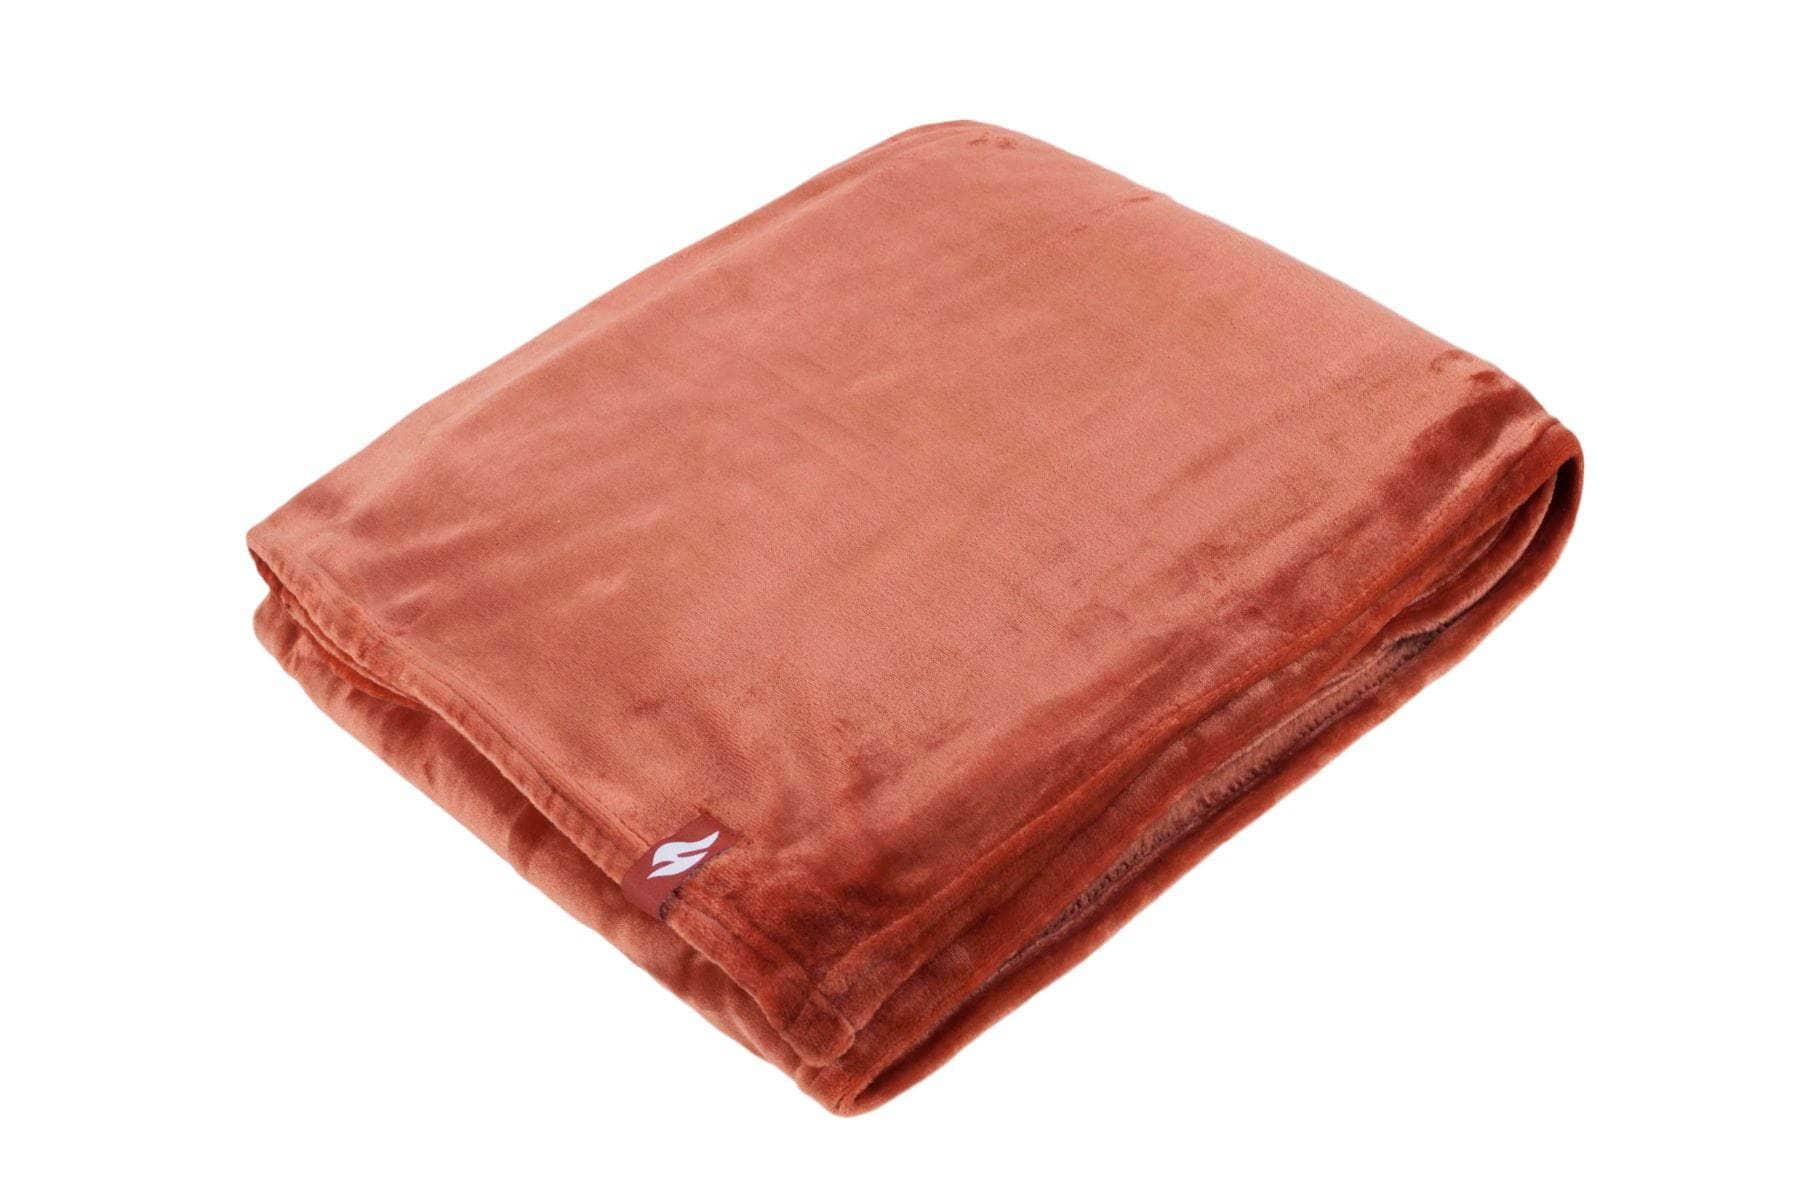 Homeware  -  Heat Holder Blanket - Copper  -  60009947